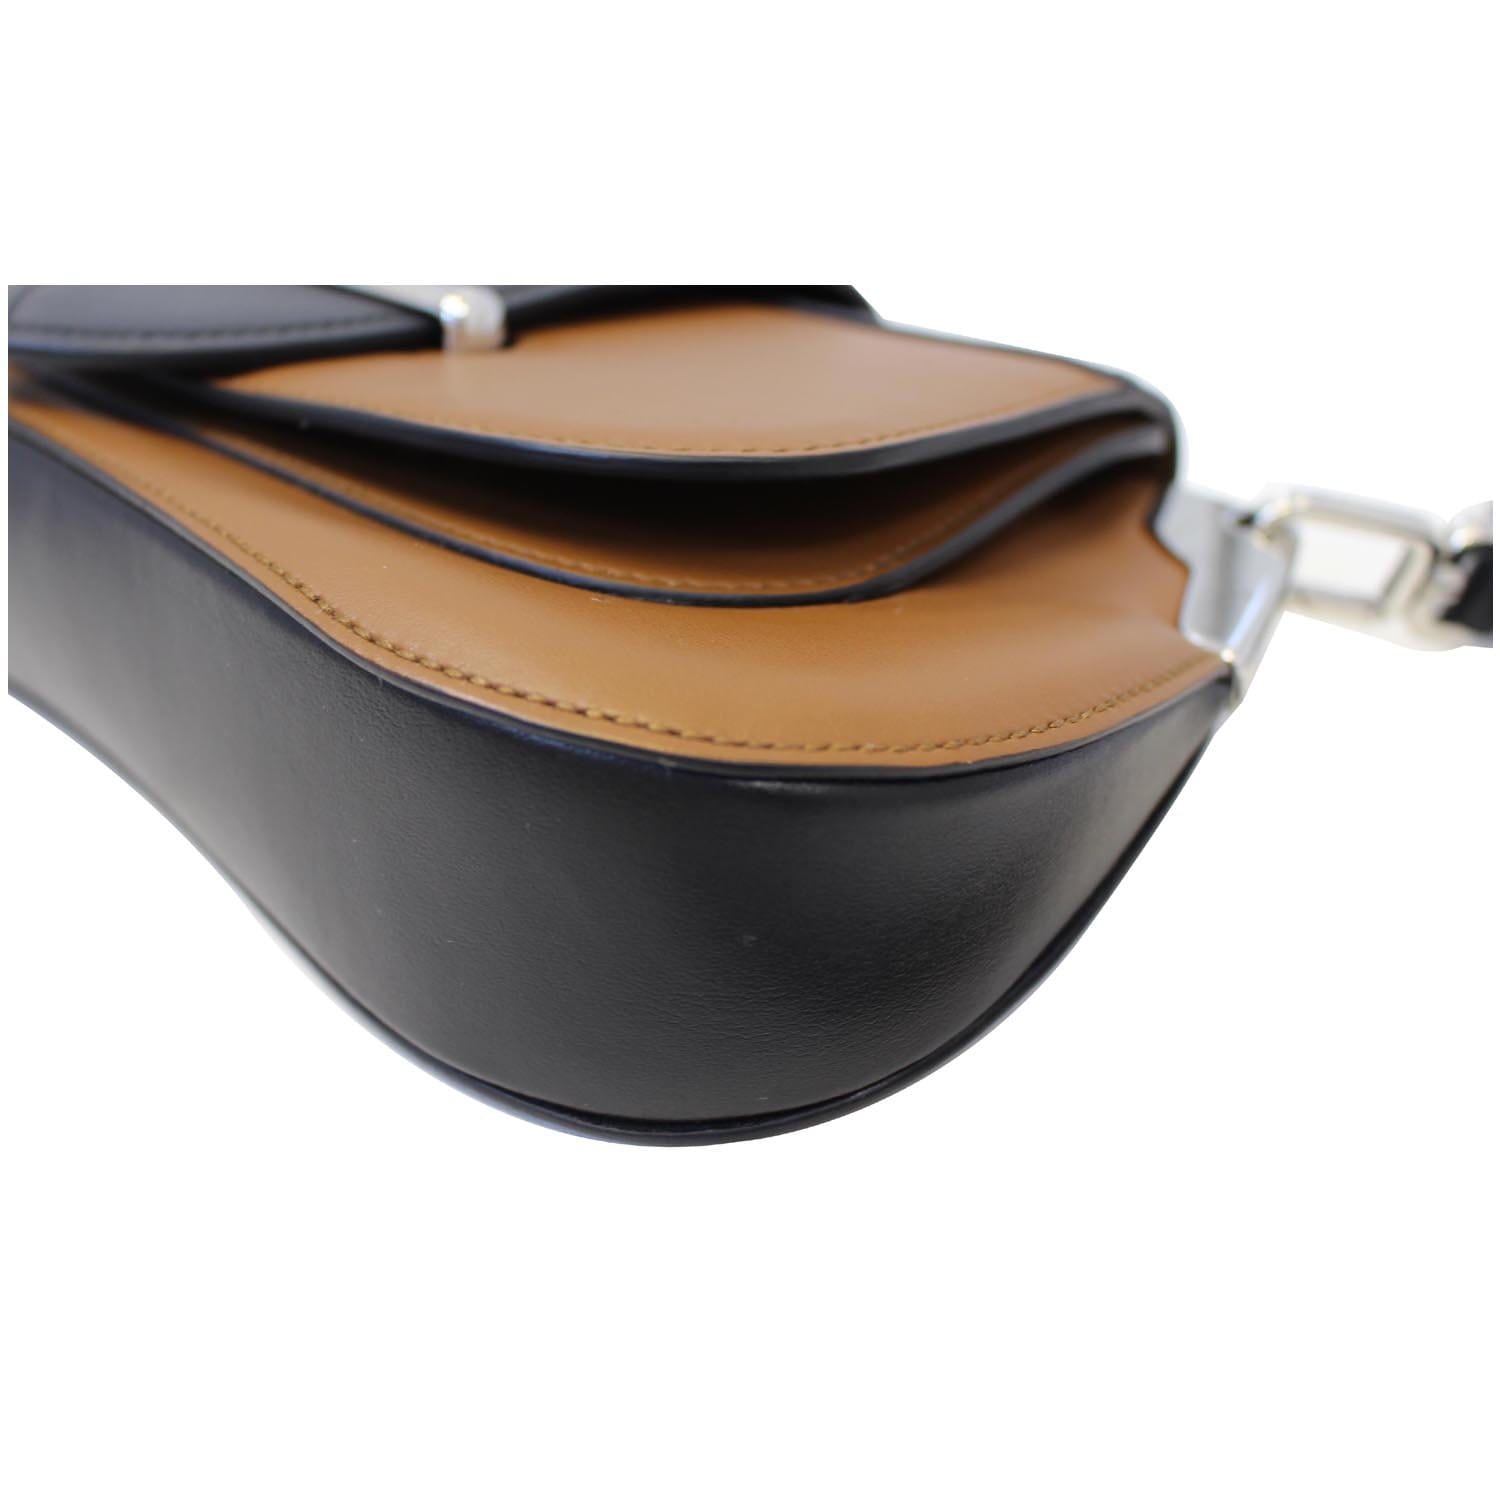 PRADA Sidonie Calf Leather Shoulder Bag Brown/Black 1BD168-US